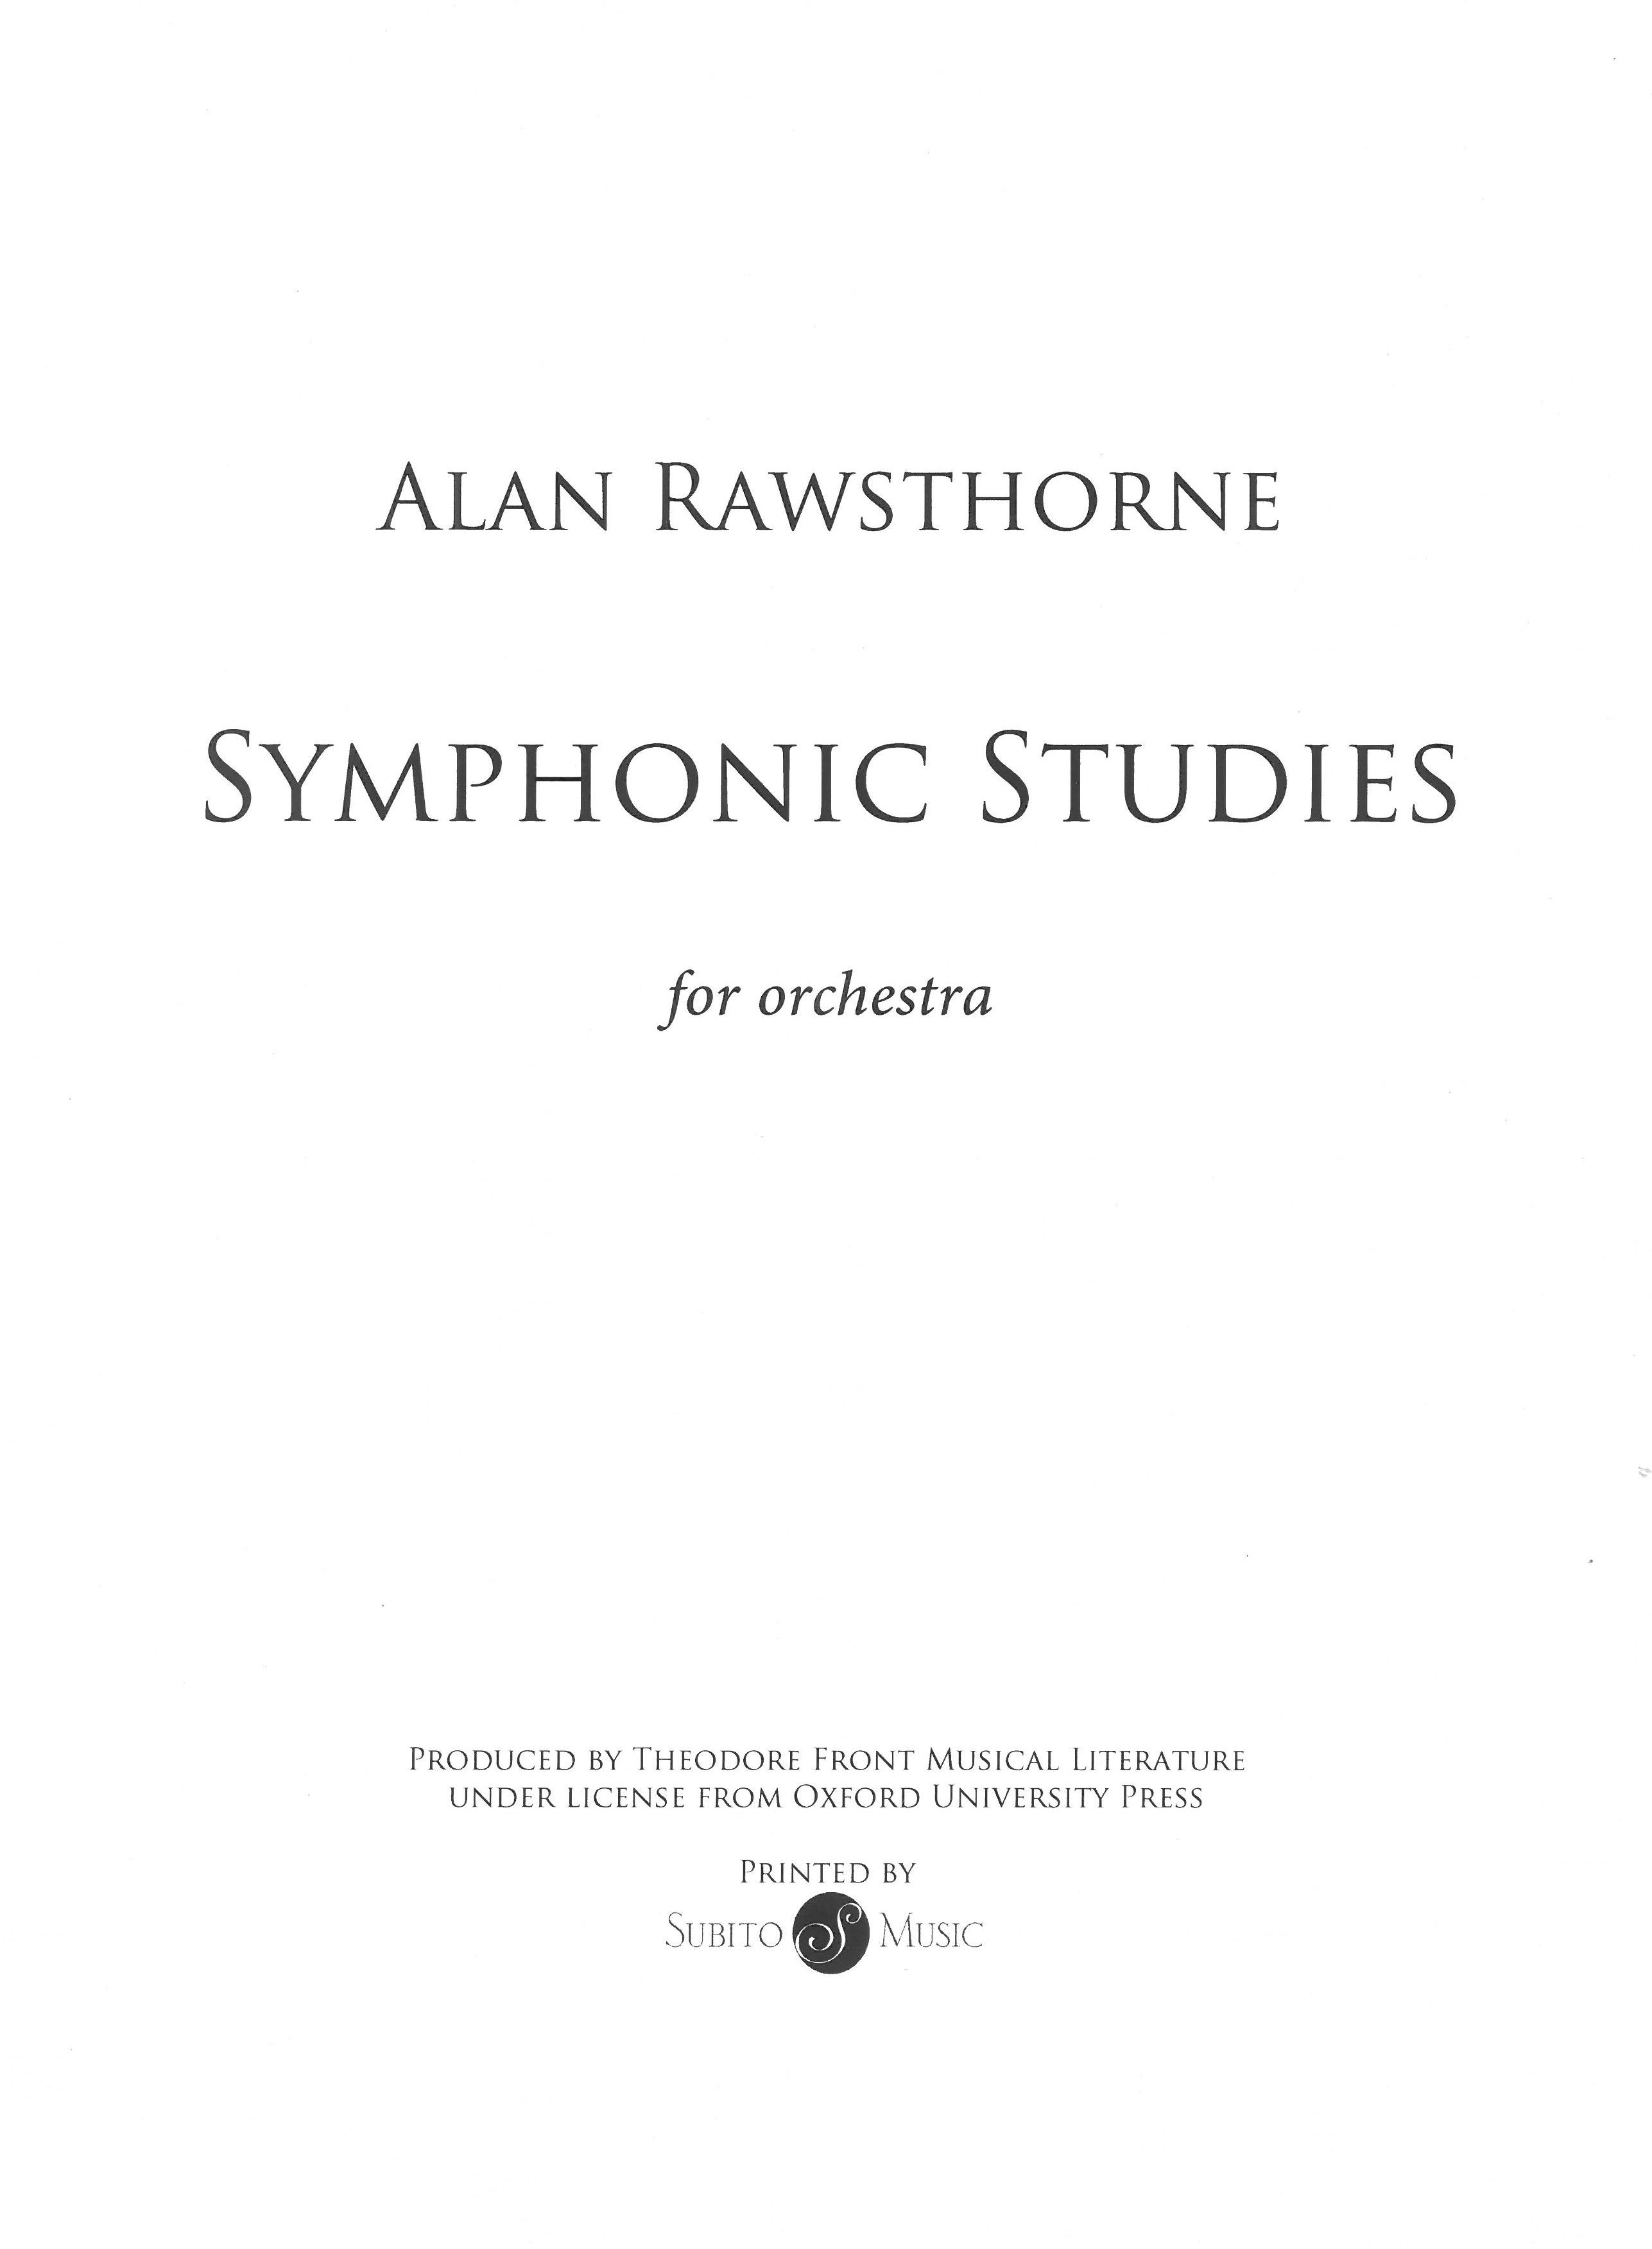 Symphonic Studies (1938).